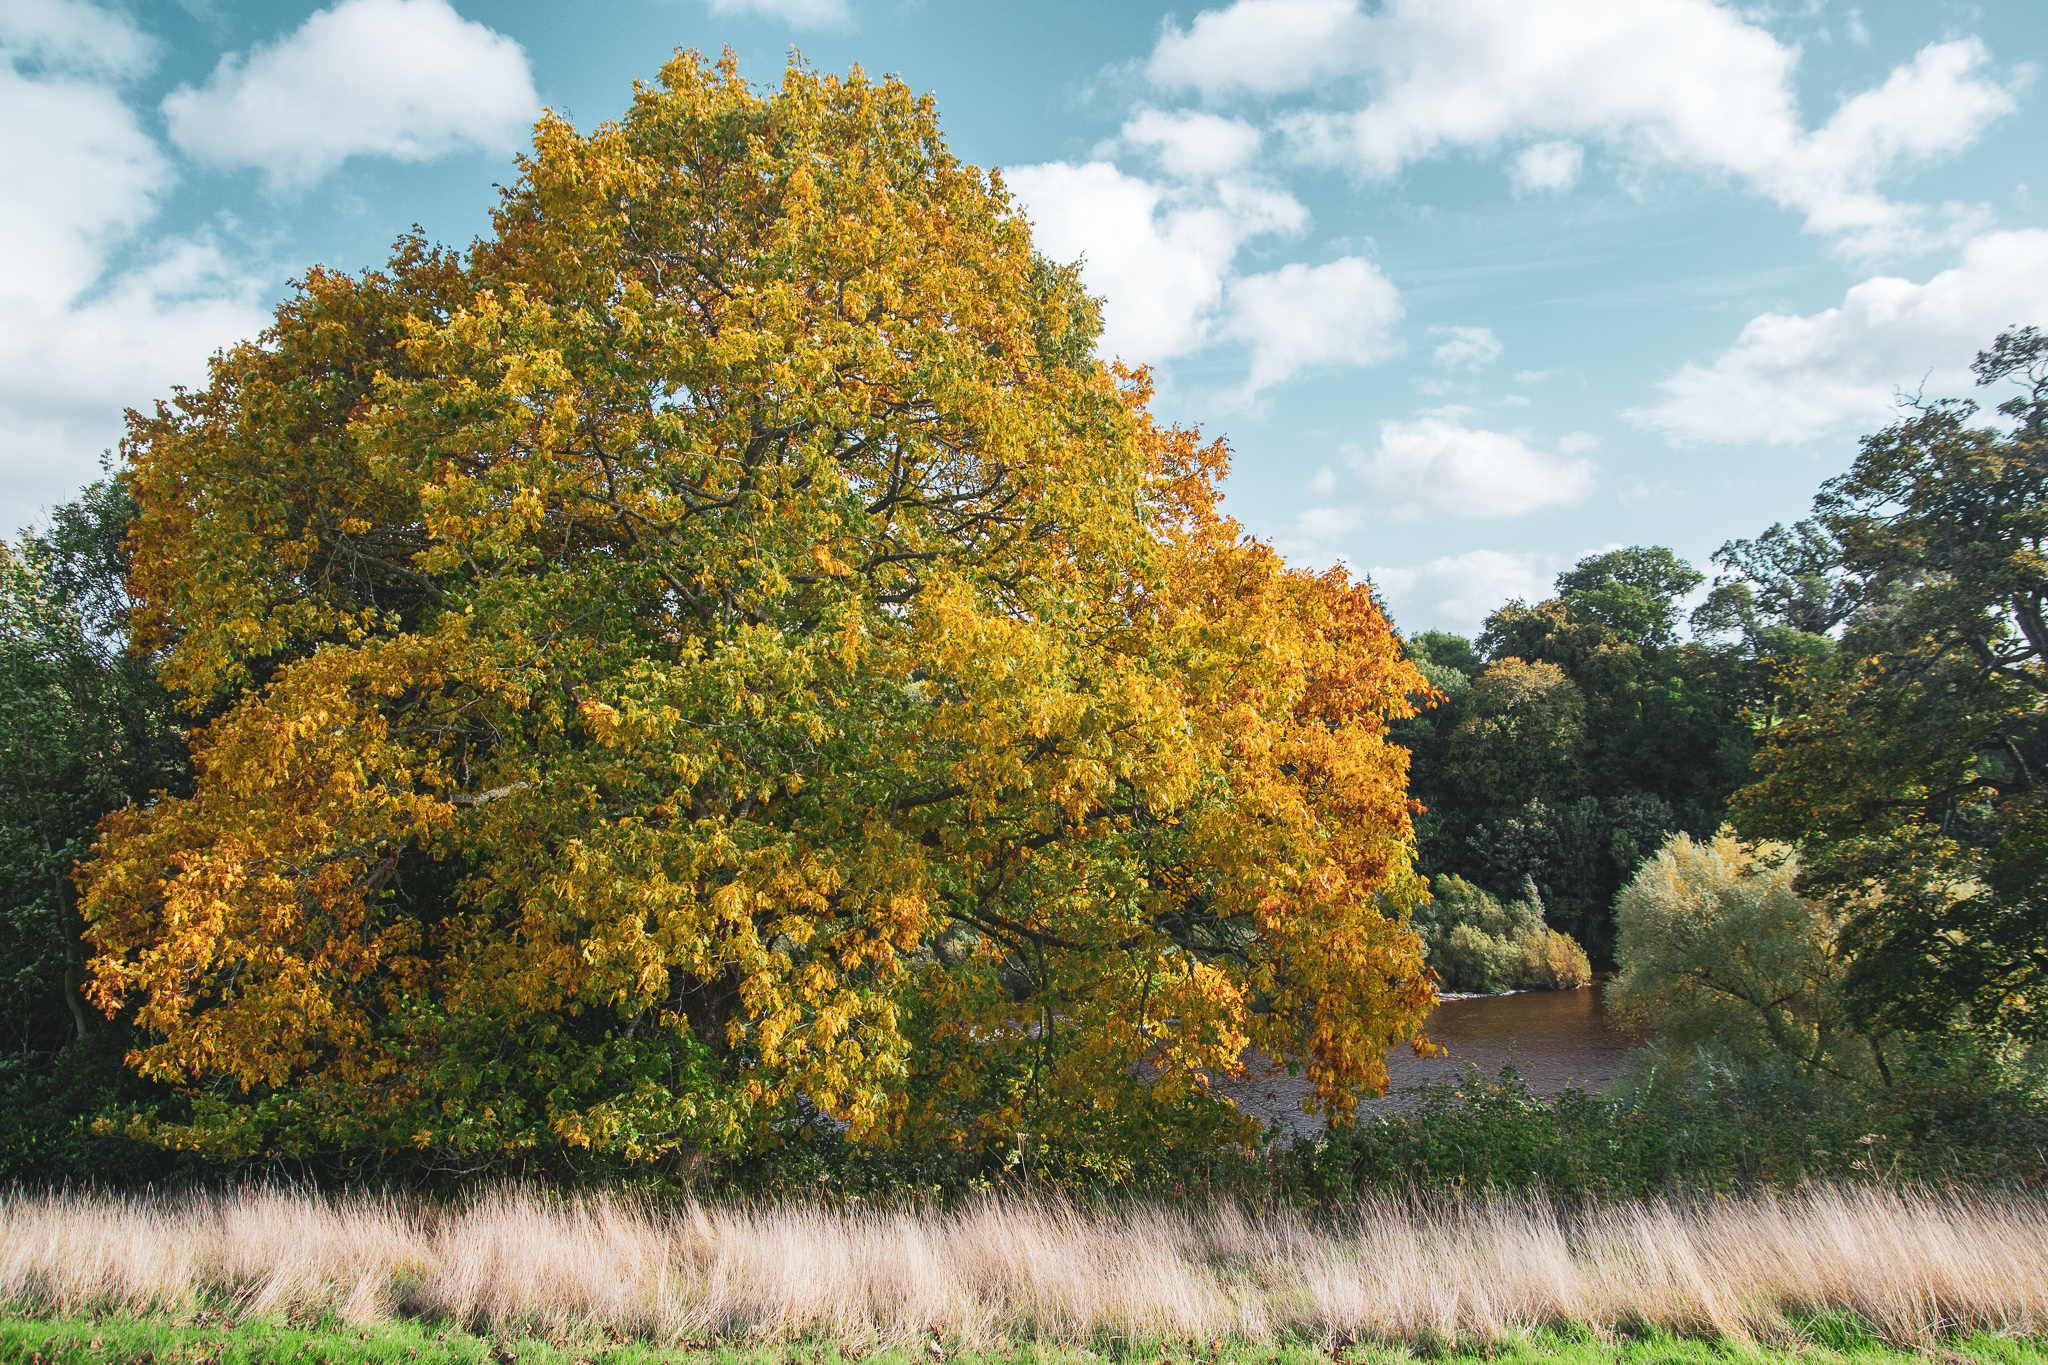 Golden Autumn Trees at Milne Graden